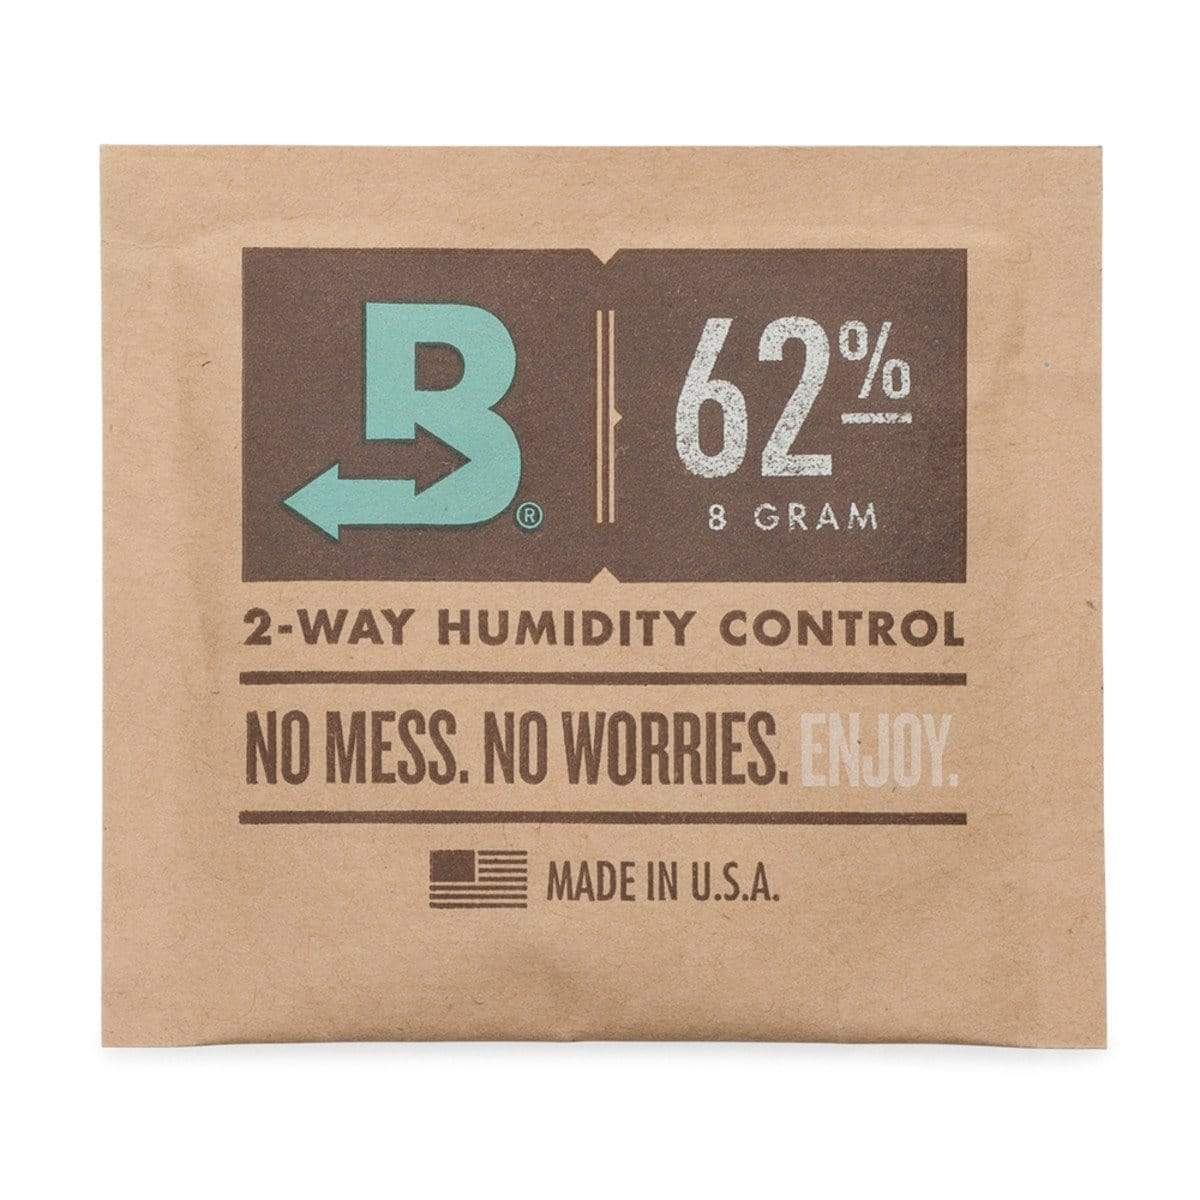 10-Pack 62% RH Boveda Humidity Control Pack | 8 gram